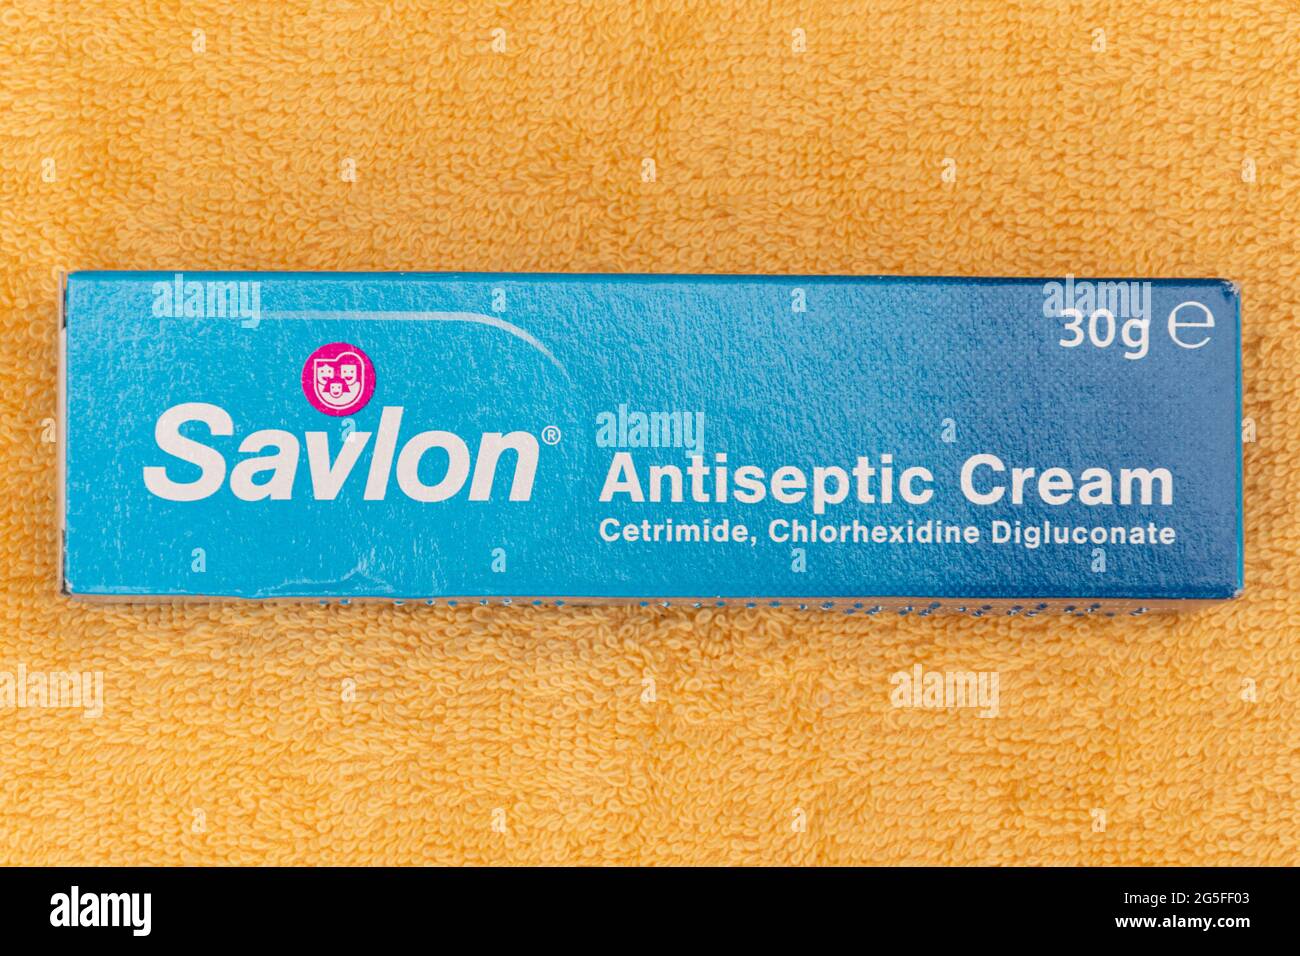 Savlon antiseptic cream, personal care product Stock Photo